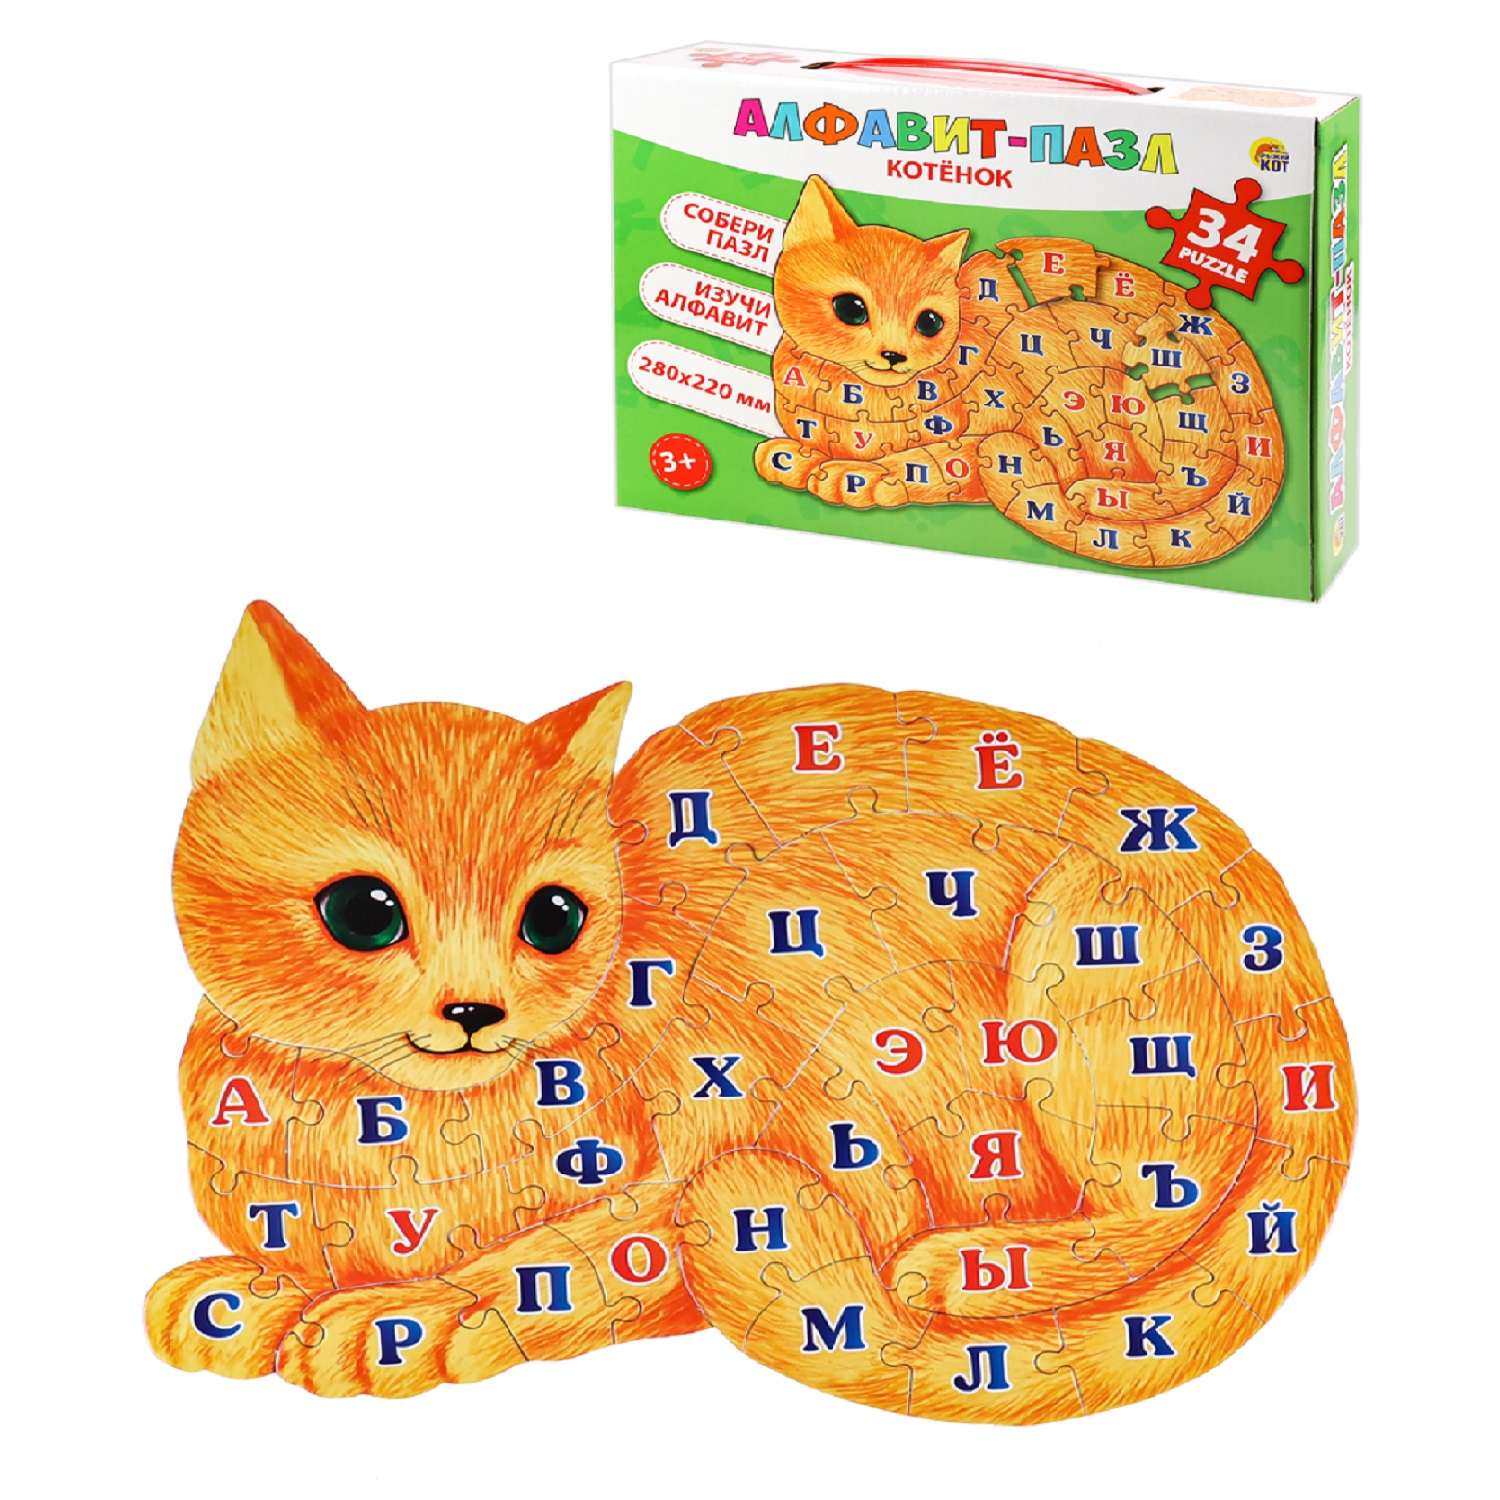 Алфавит-пазл Рыжий кот 34 элемента. Котенок - фото 4